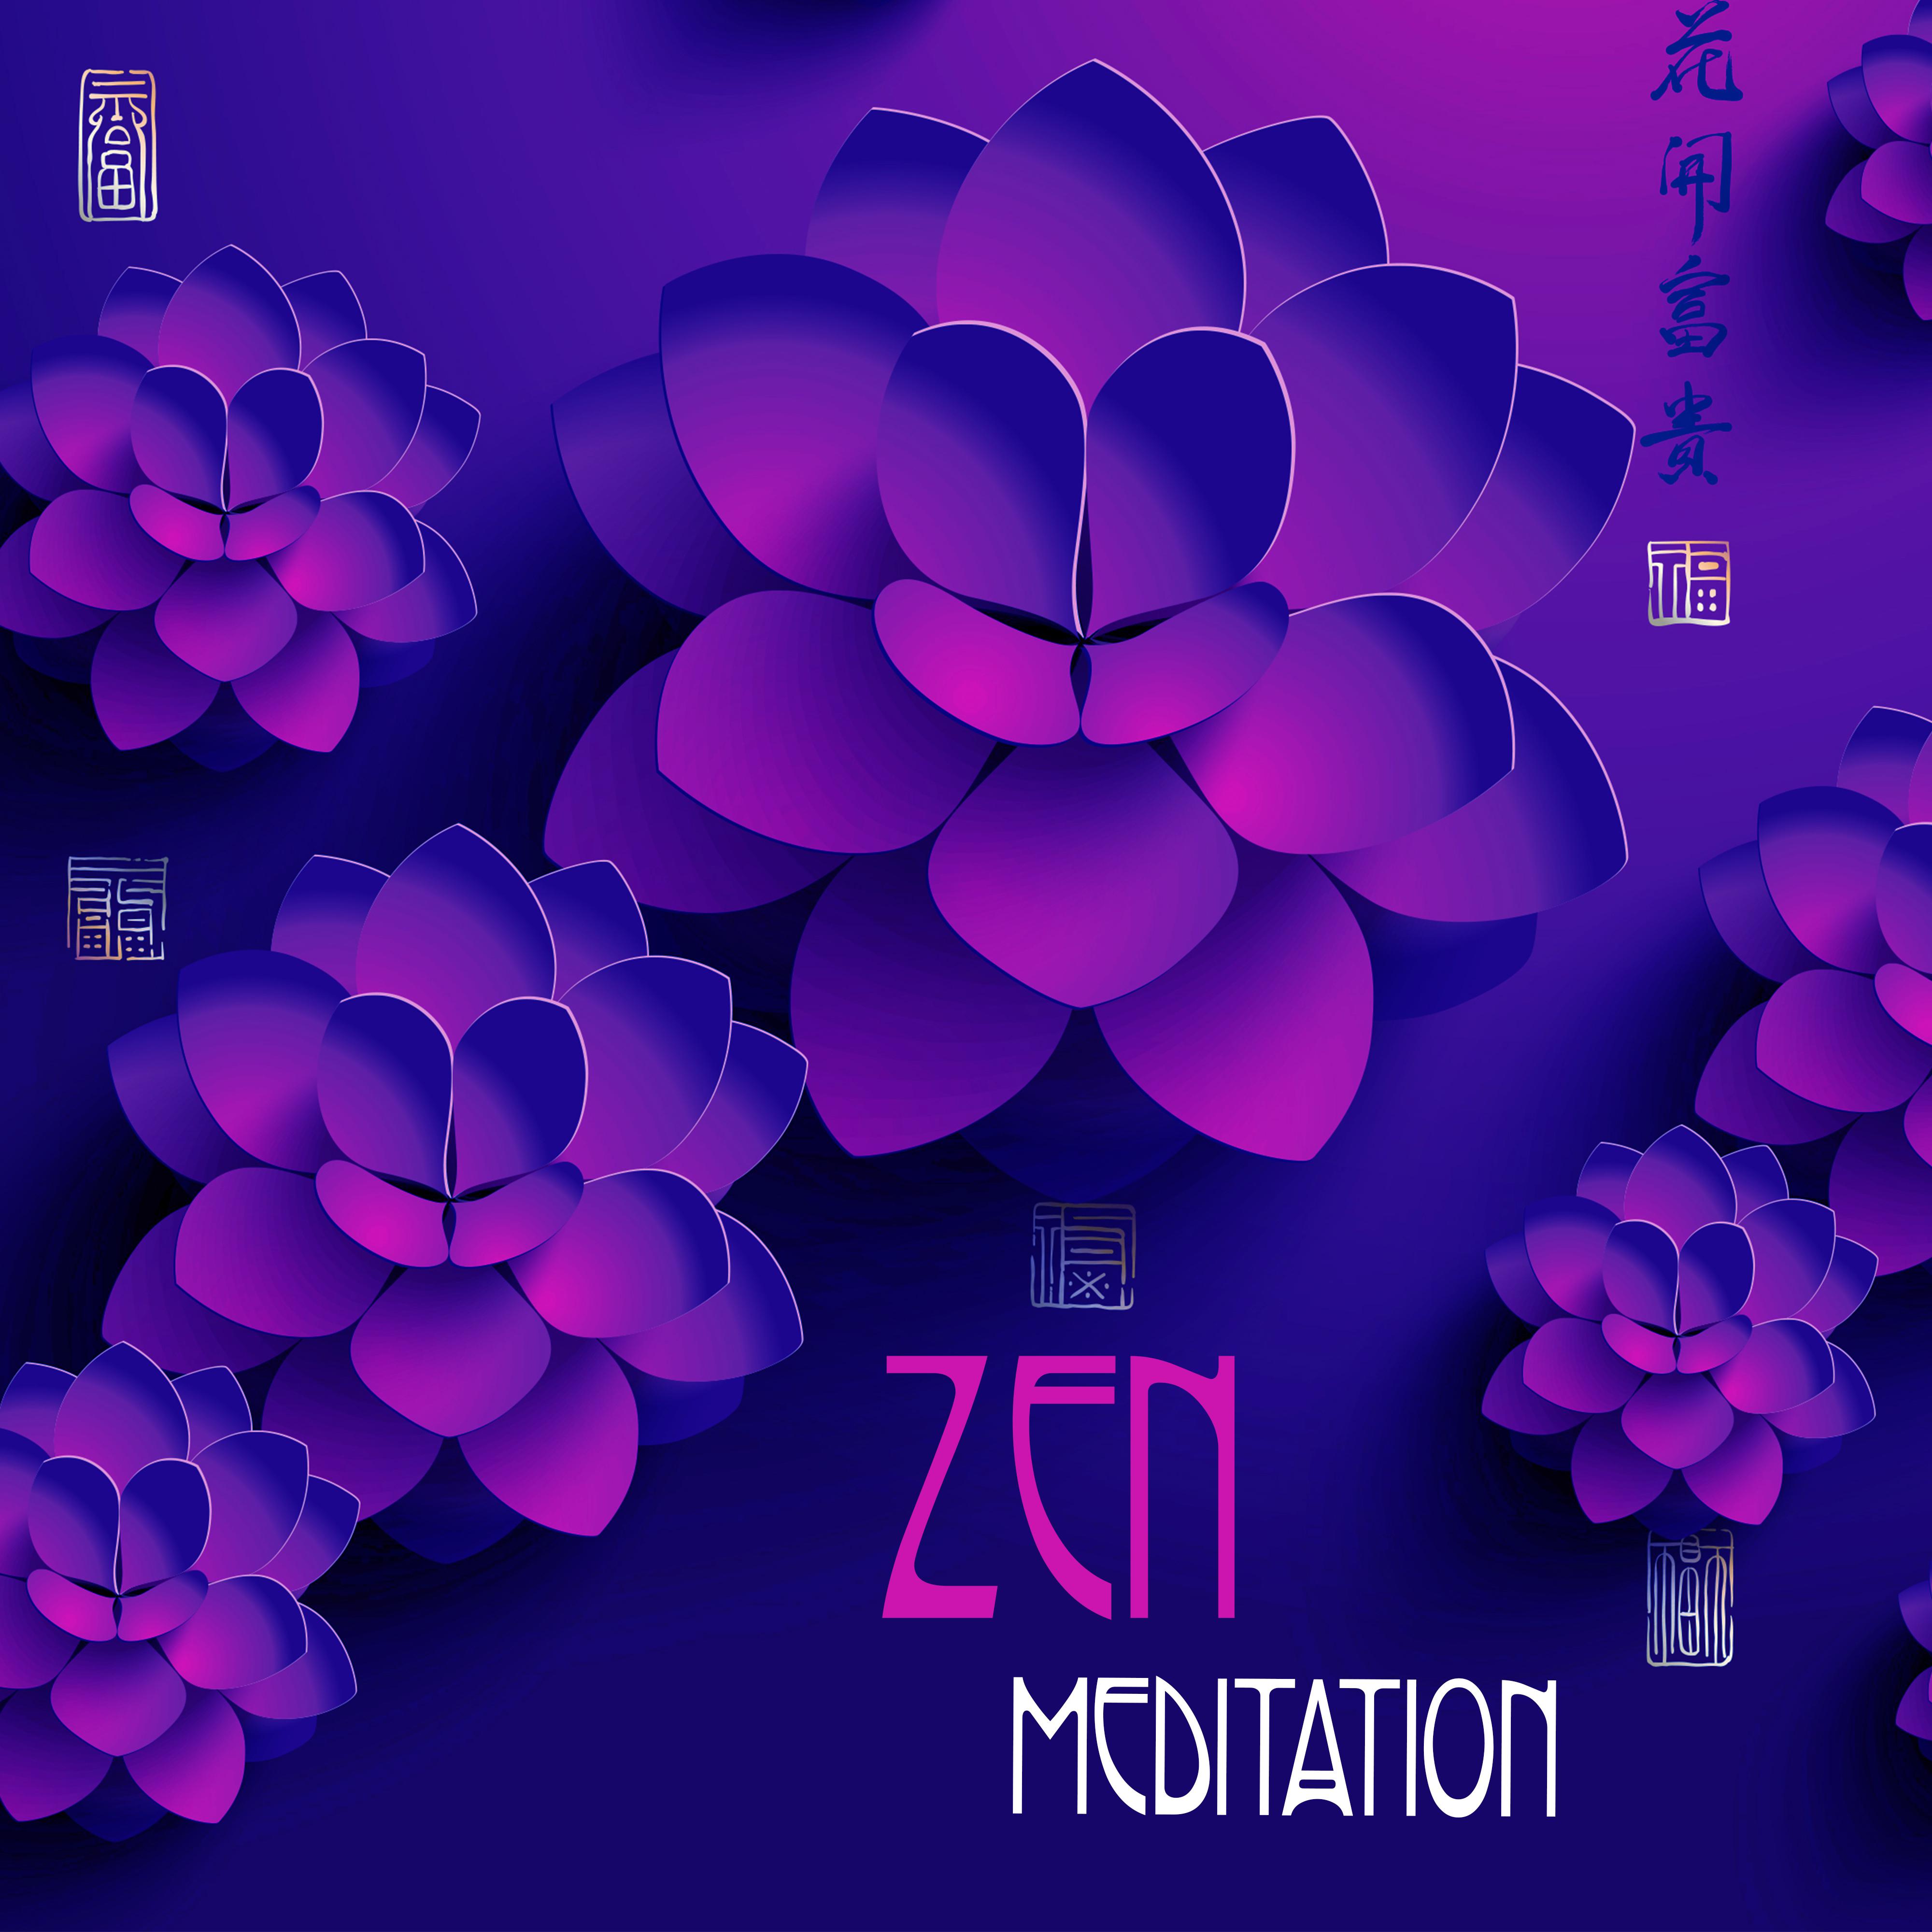 Zen Meditation  Sounds of Yoga, Peaceful Mind, Meditate, Relax with Nature Sounds, Spirituality, Buddha Lounge, Reiki Music, Yoga Meditation